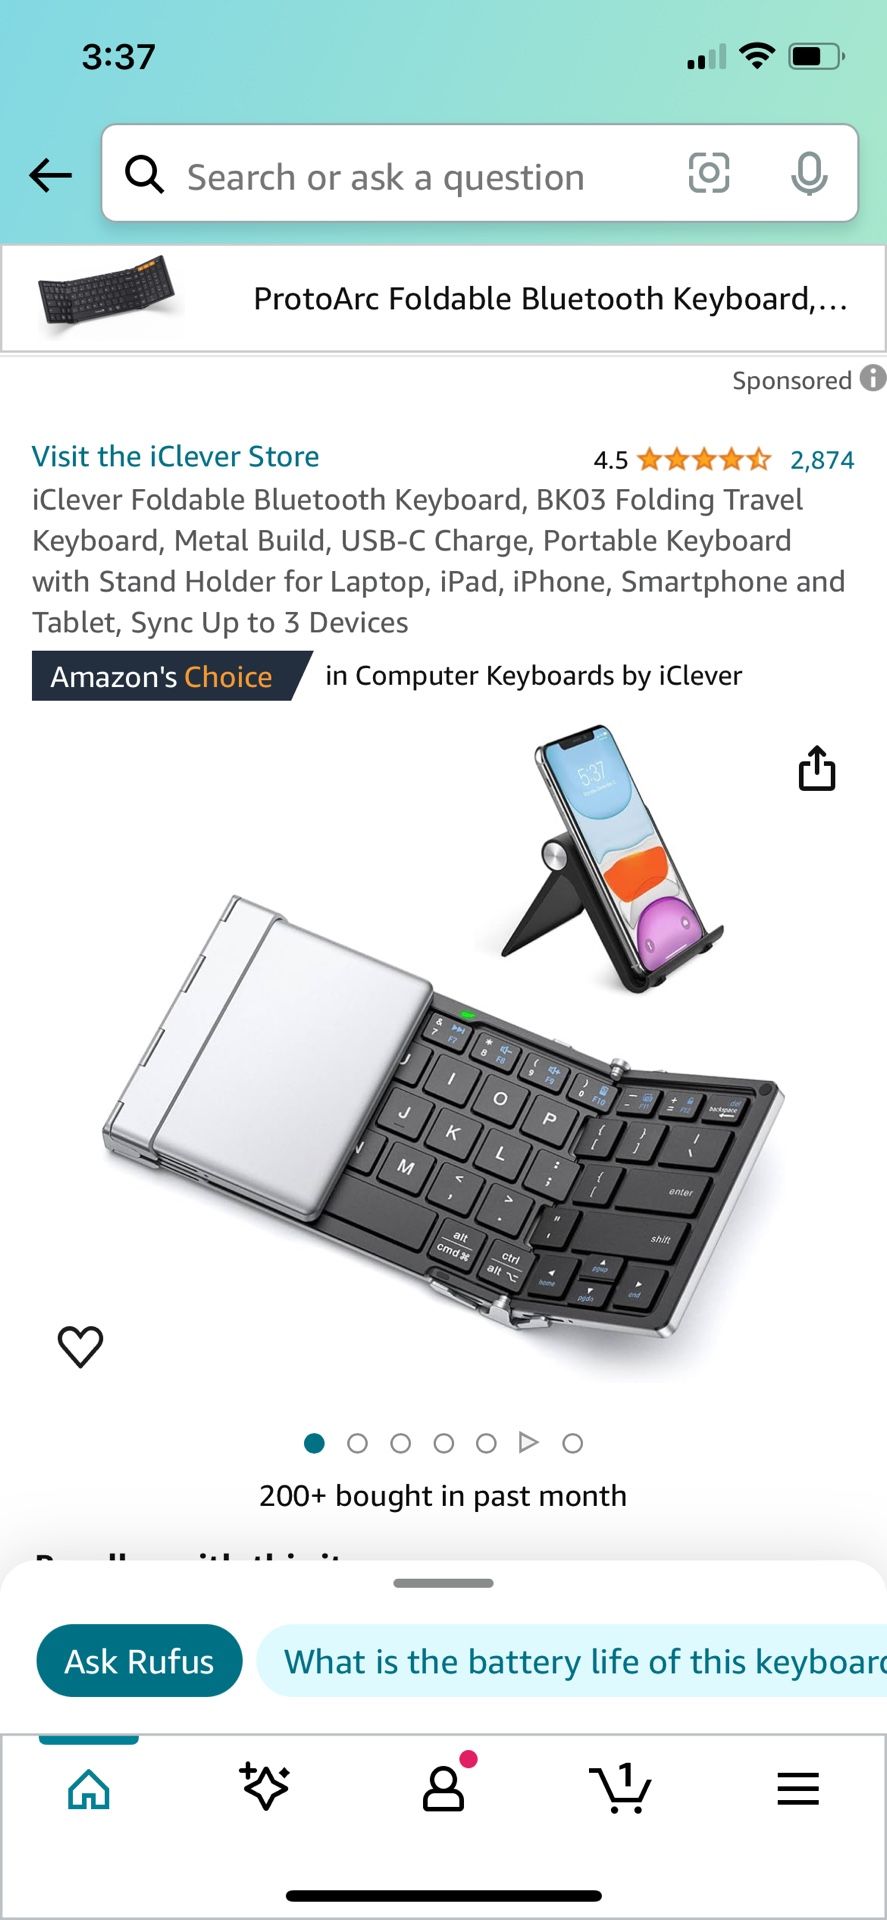 Foldable Bluetooth Keyboard For PC / iPad/Phone